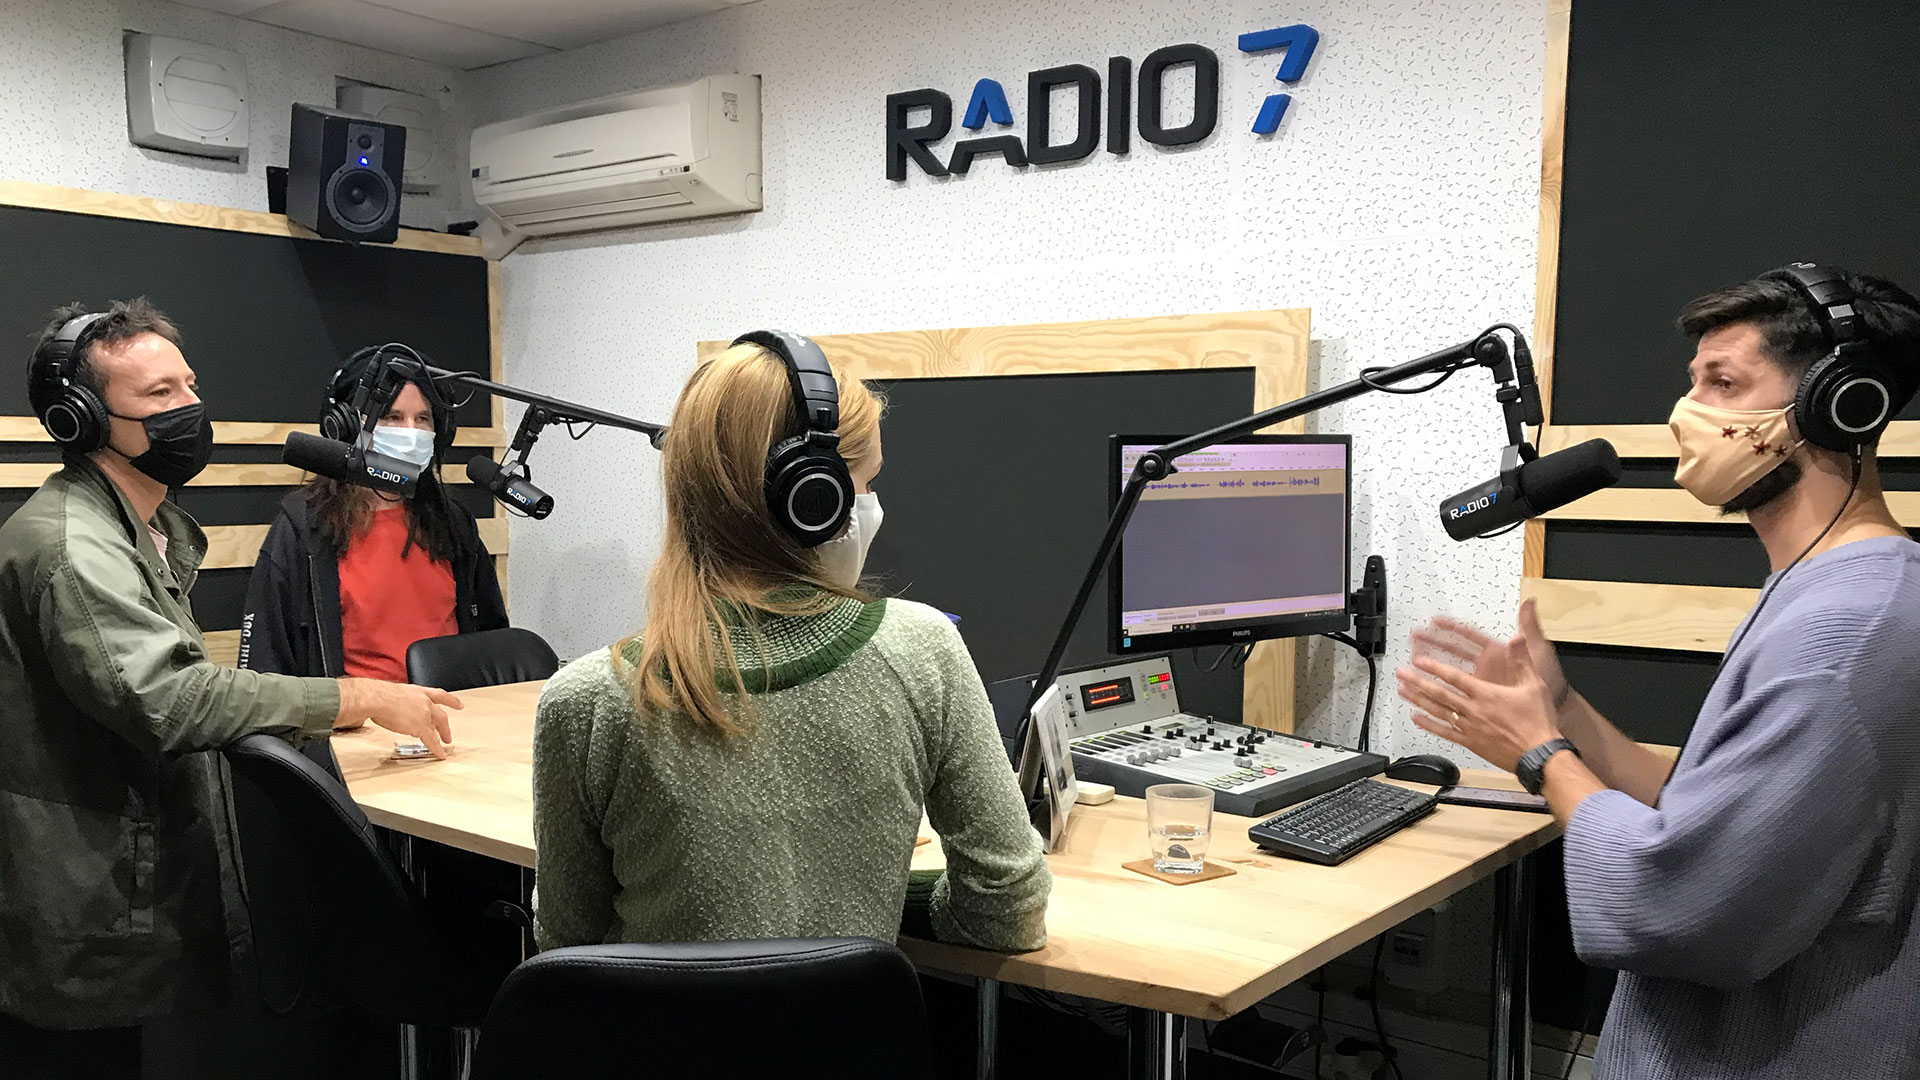 David Pierce and Luke Greenwood shared the Gospel on a radio show in Slovakia